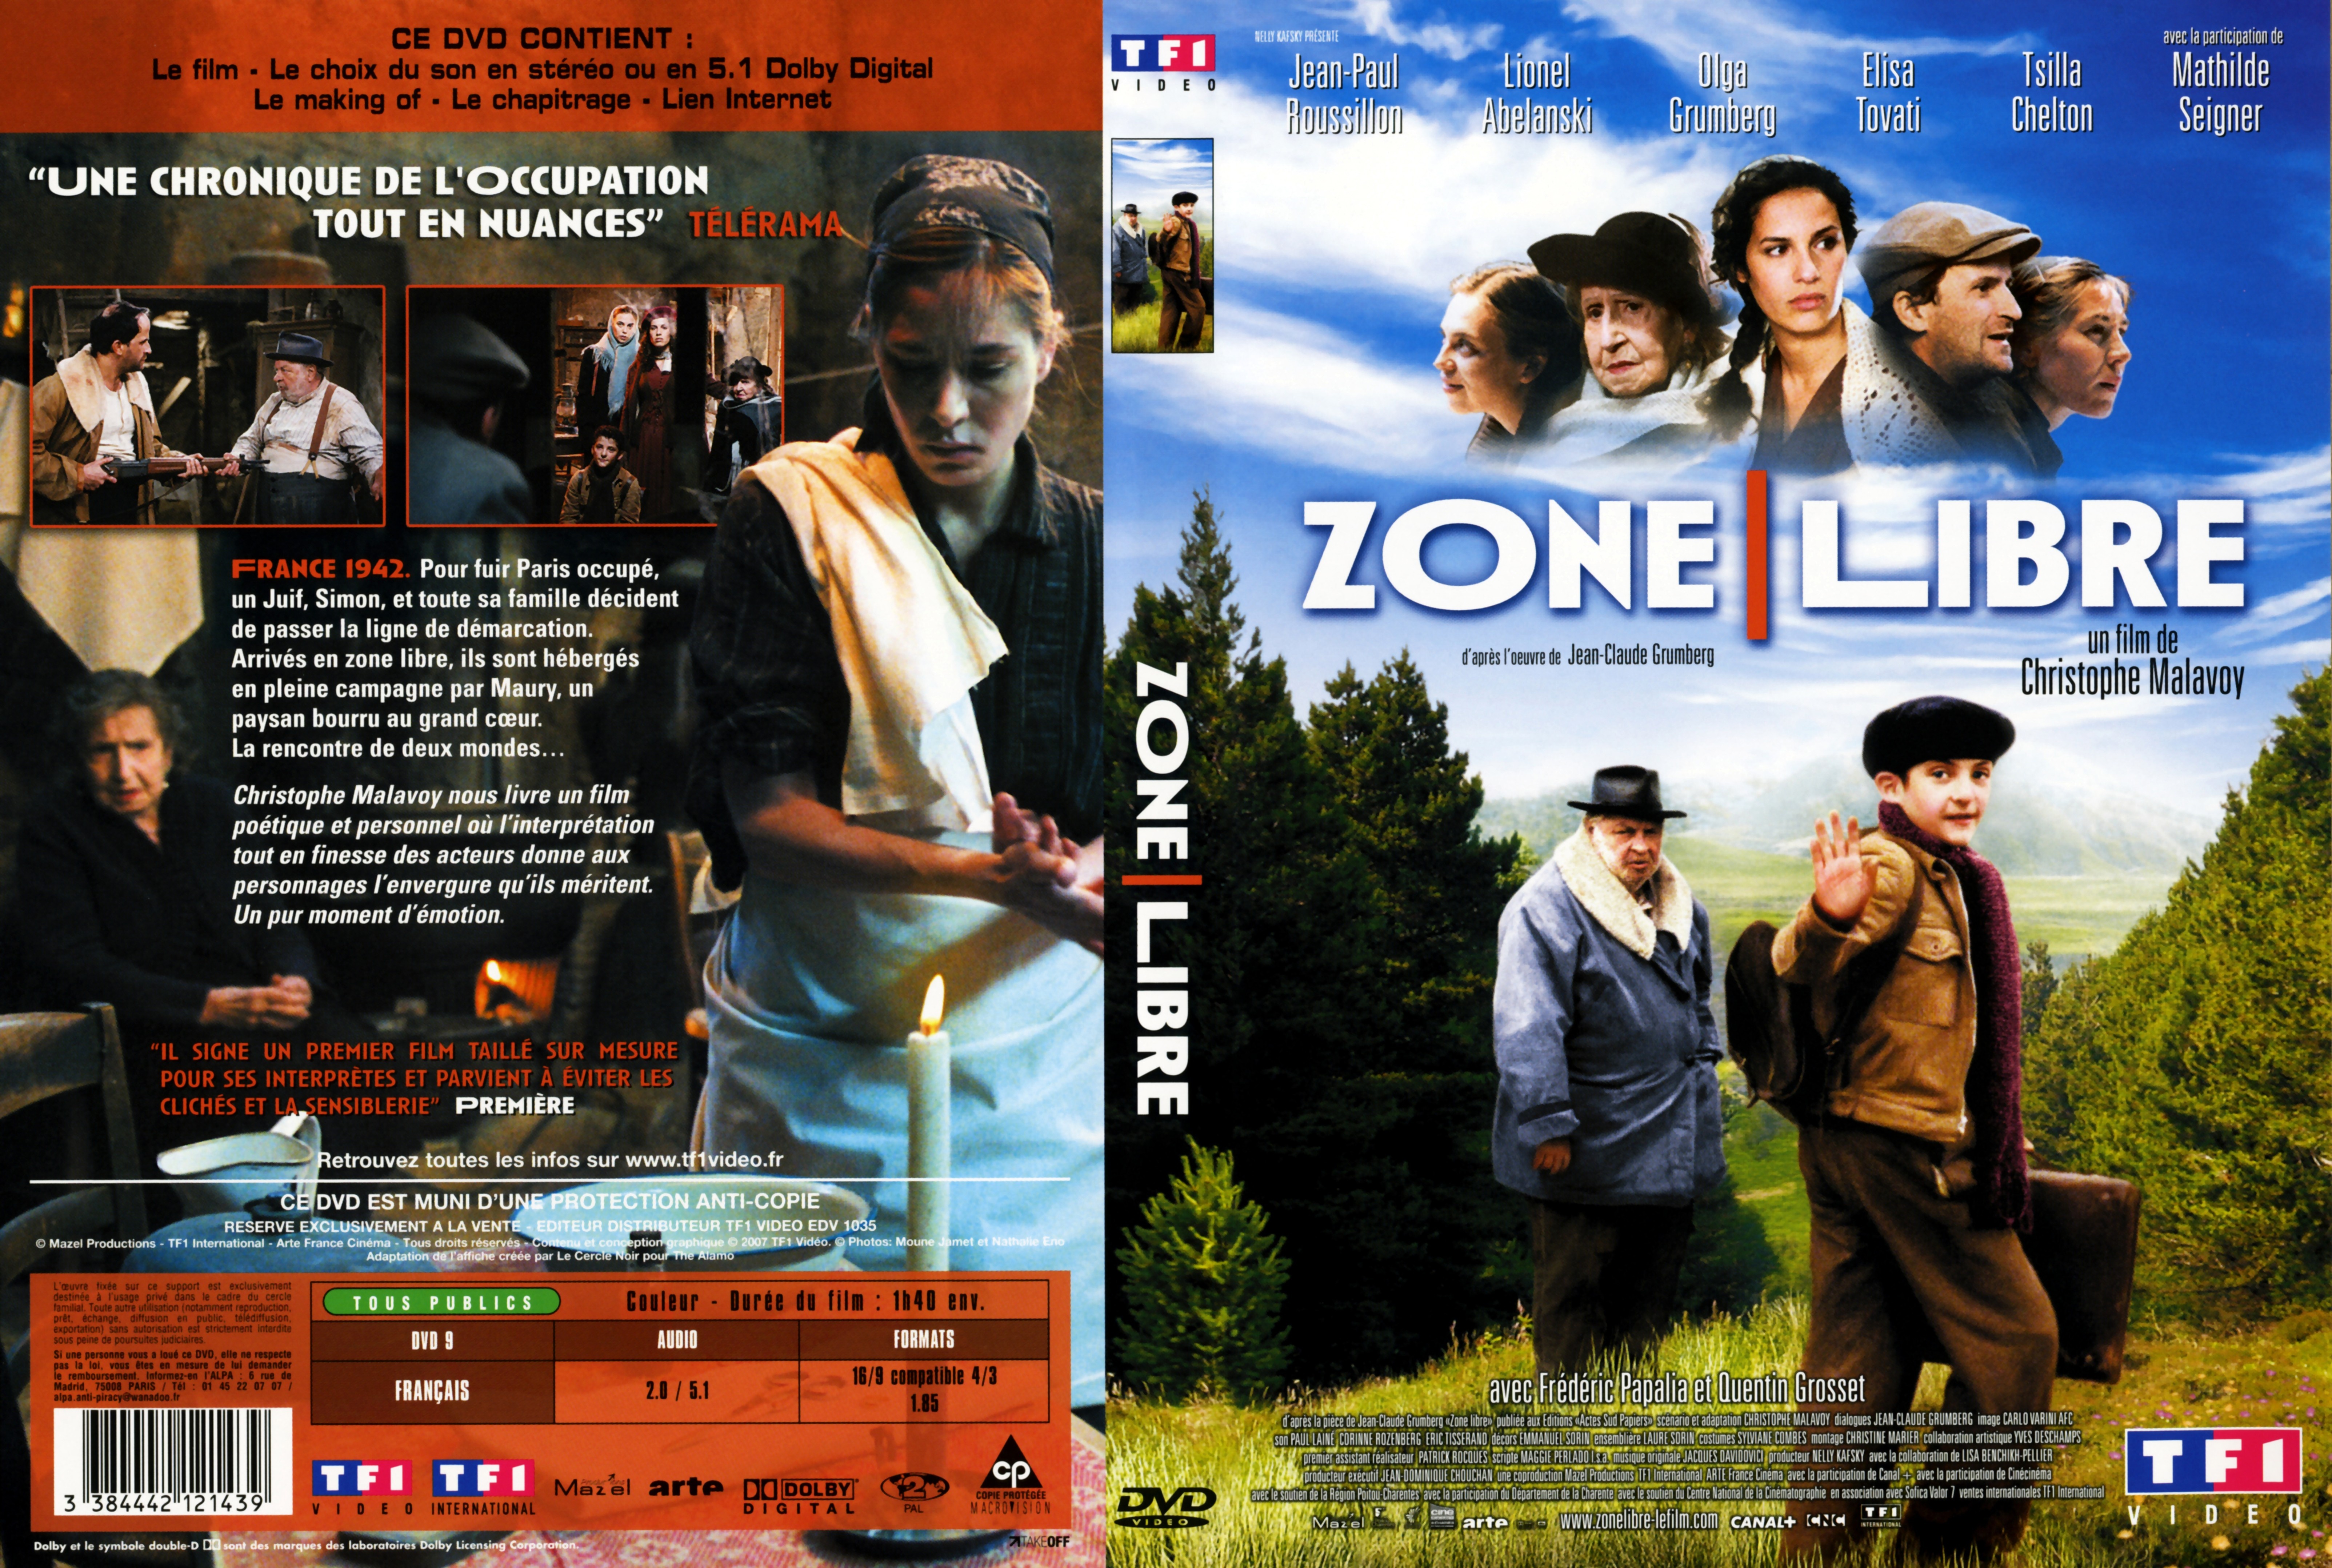 Jaquette DVD Zone libre